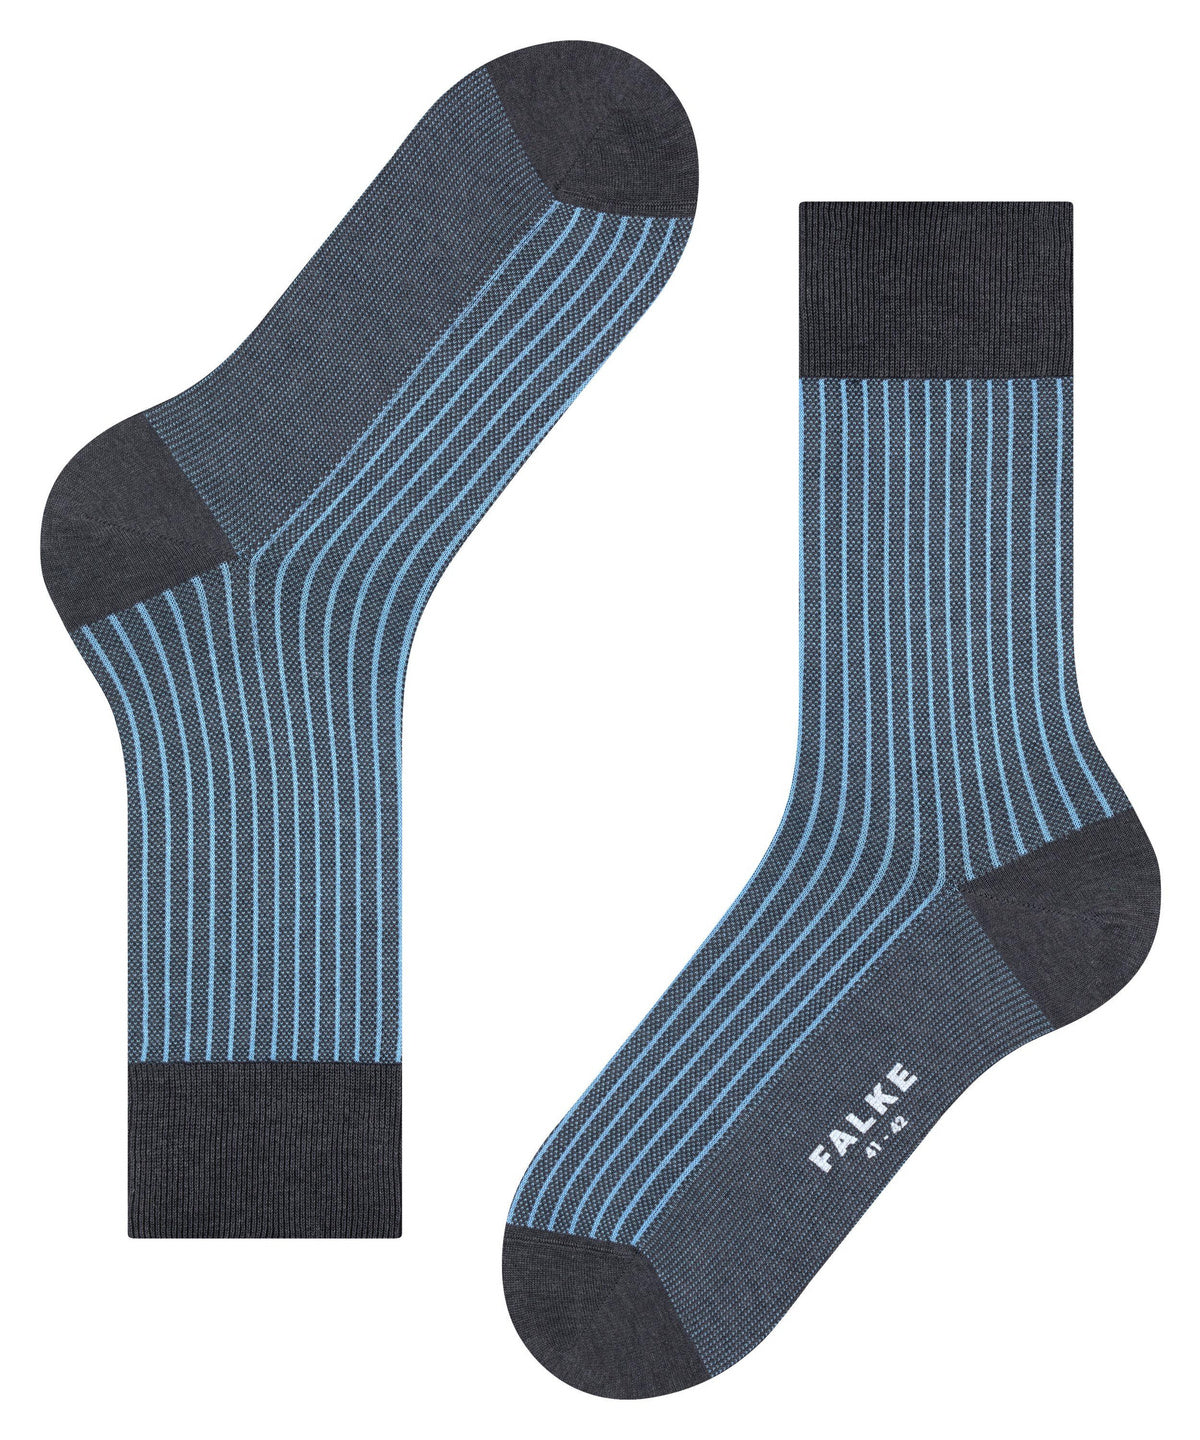 Falke grey and light blue striped socks